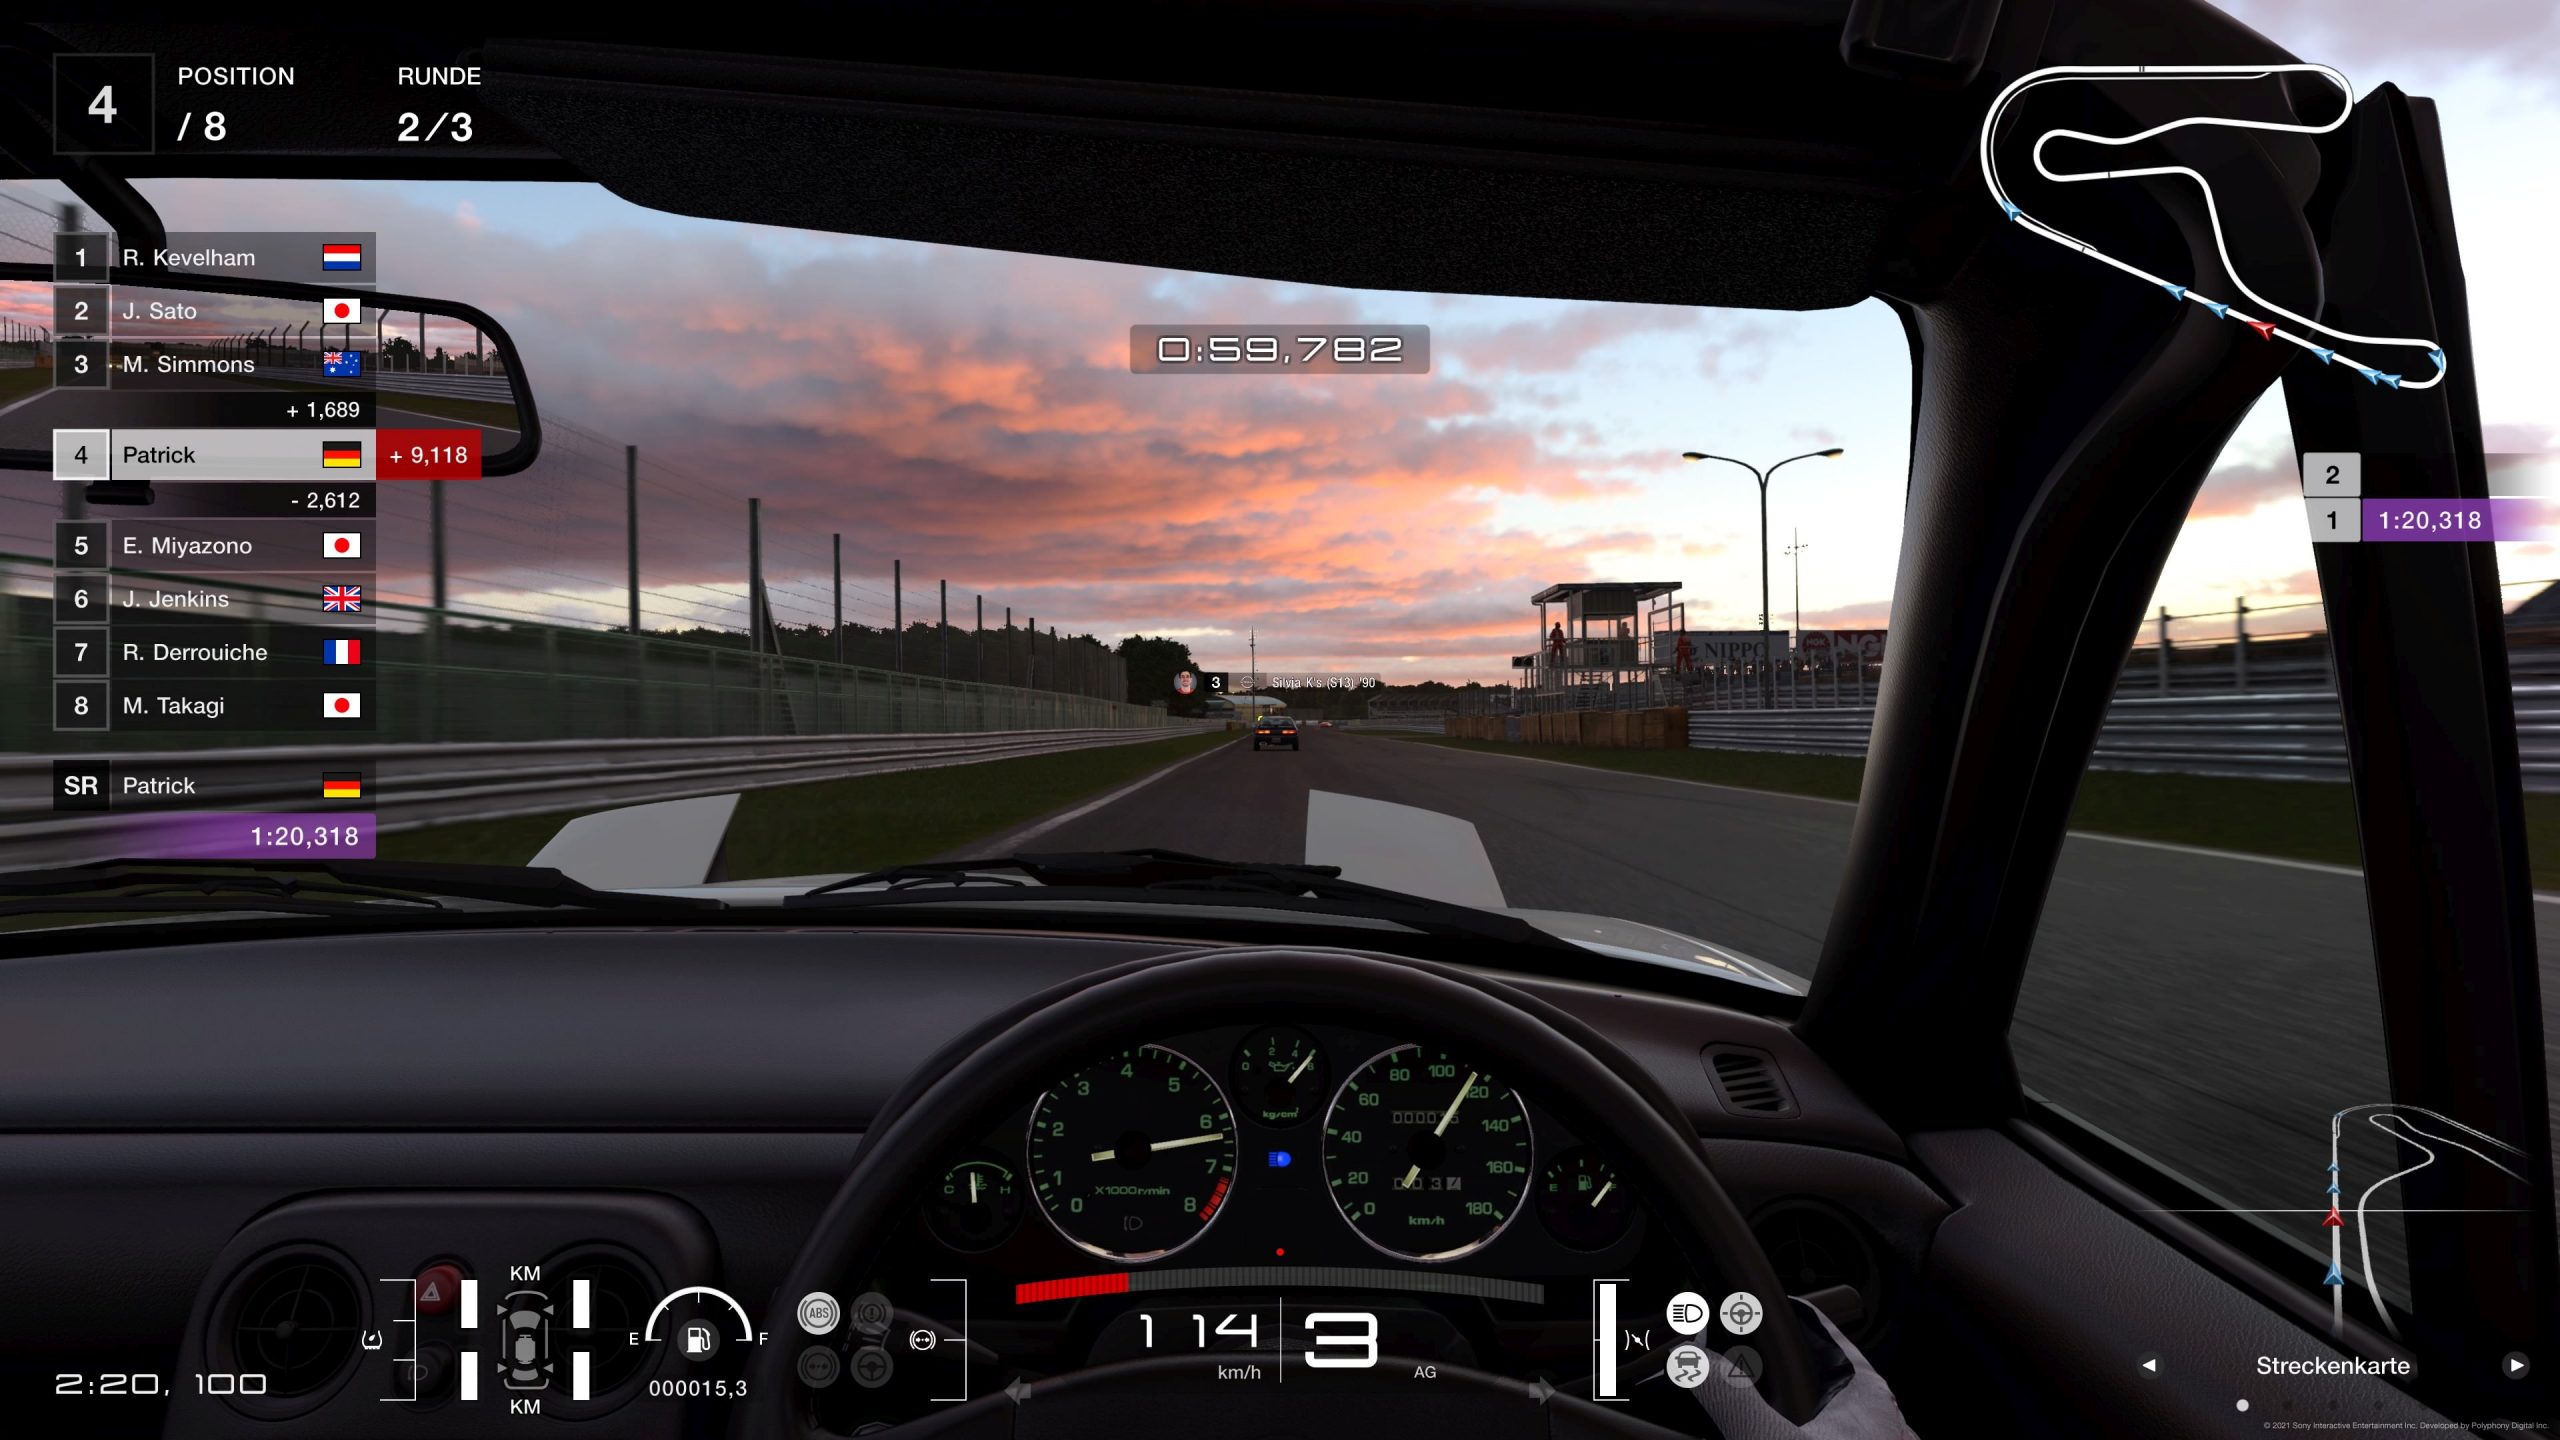 Enjoy This Stunning 4K Unedited Gran Turismo 7 Gameplay Video